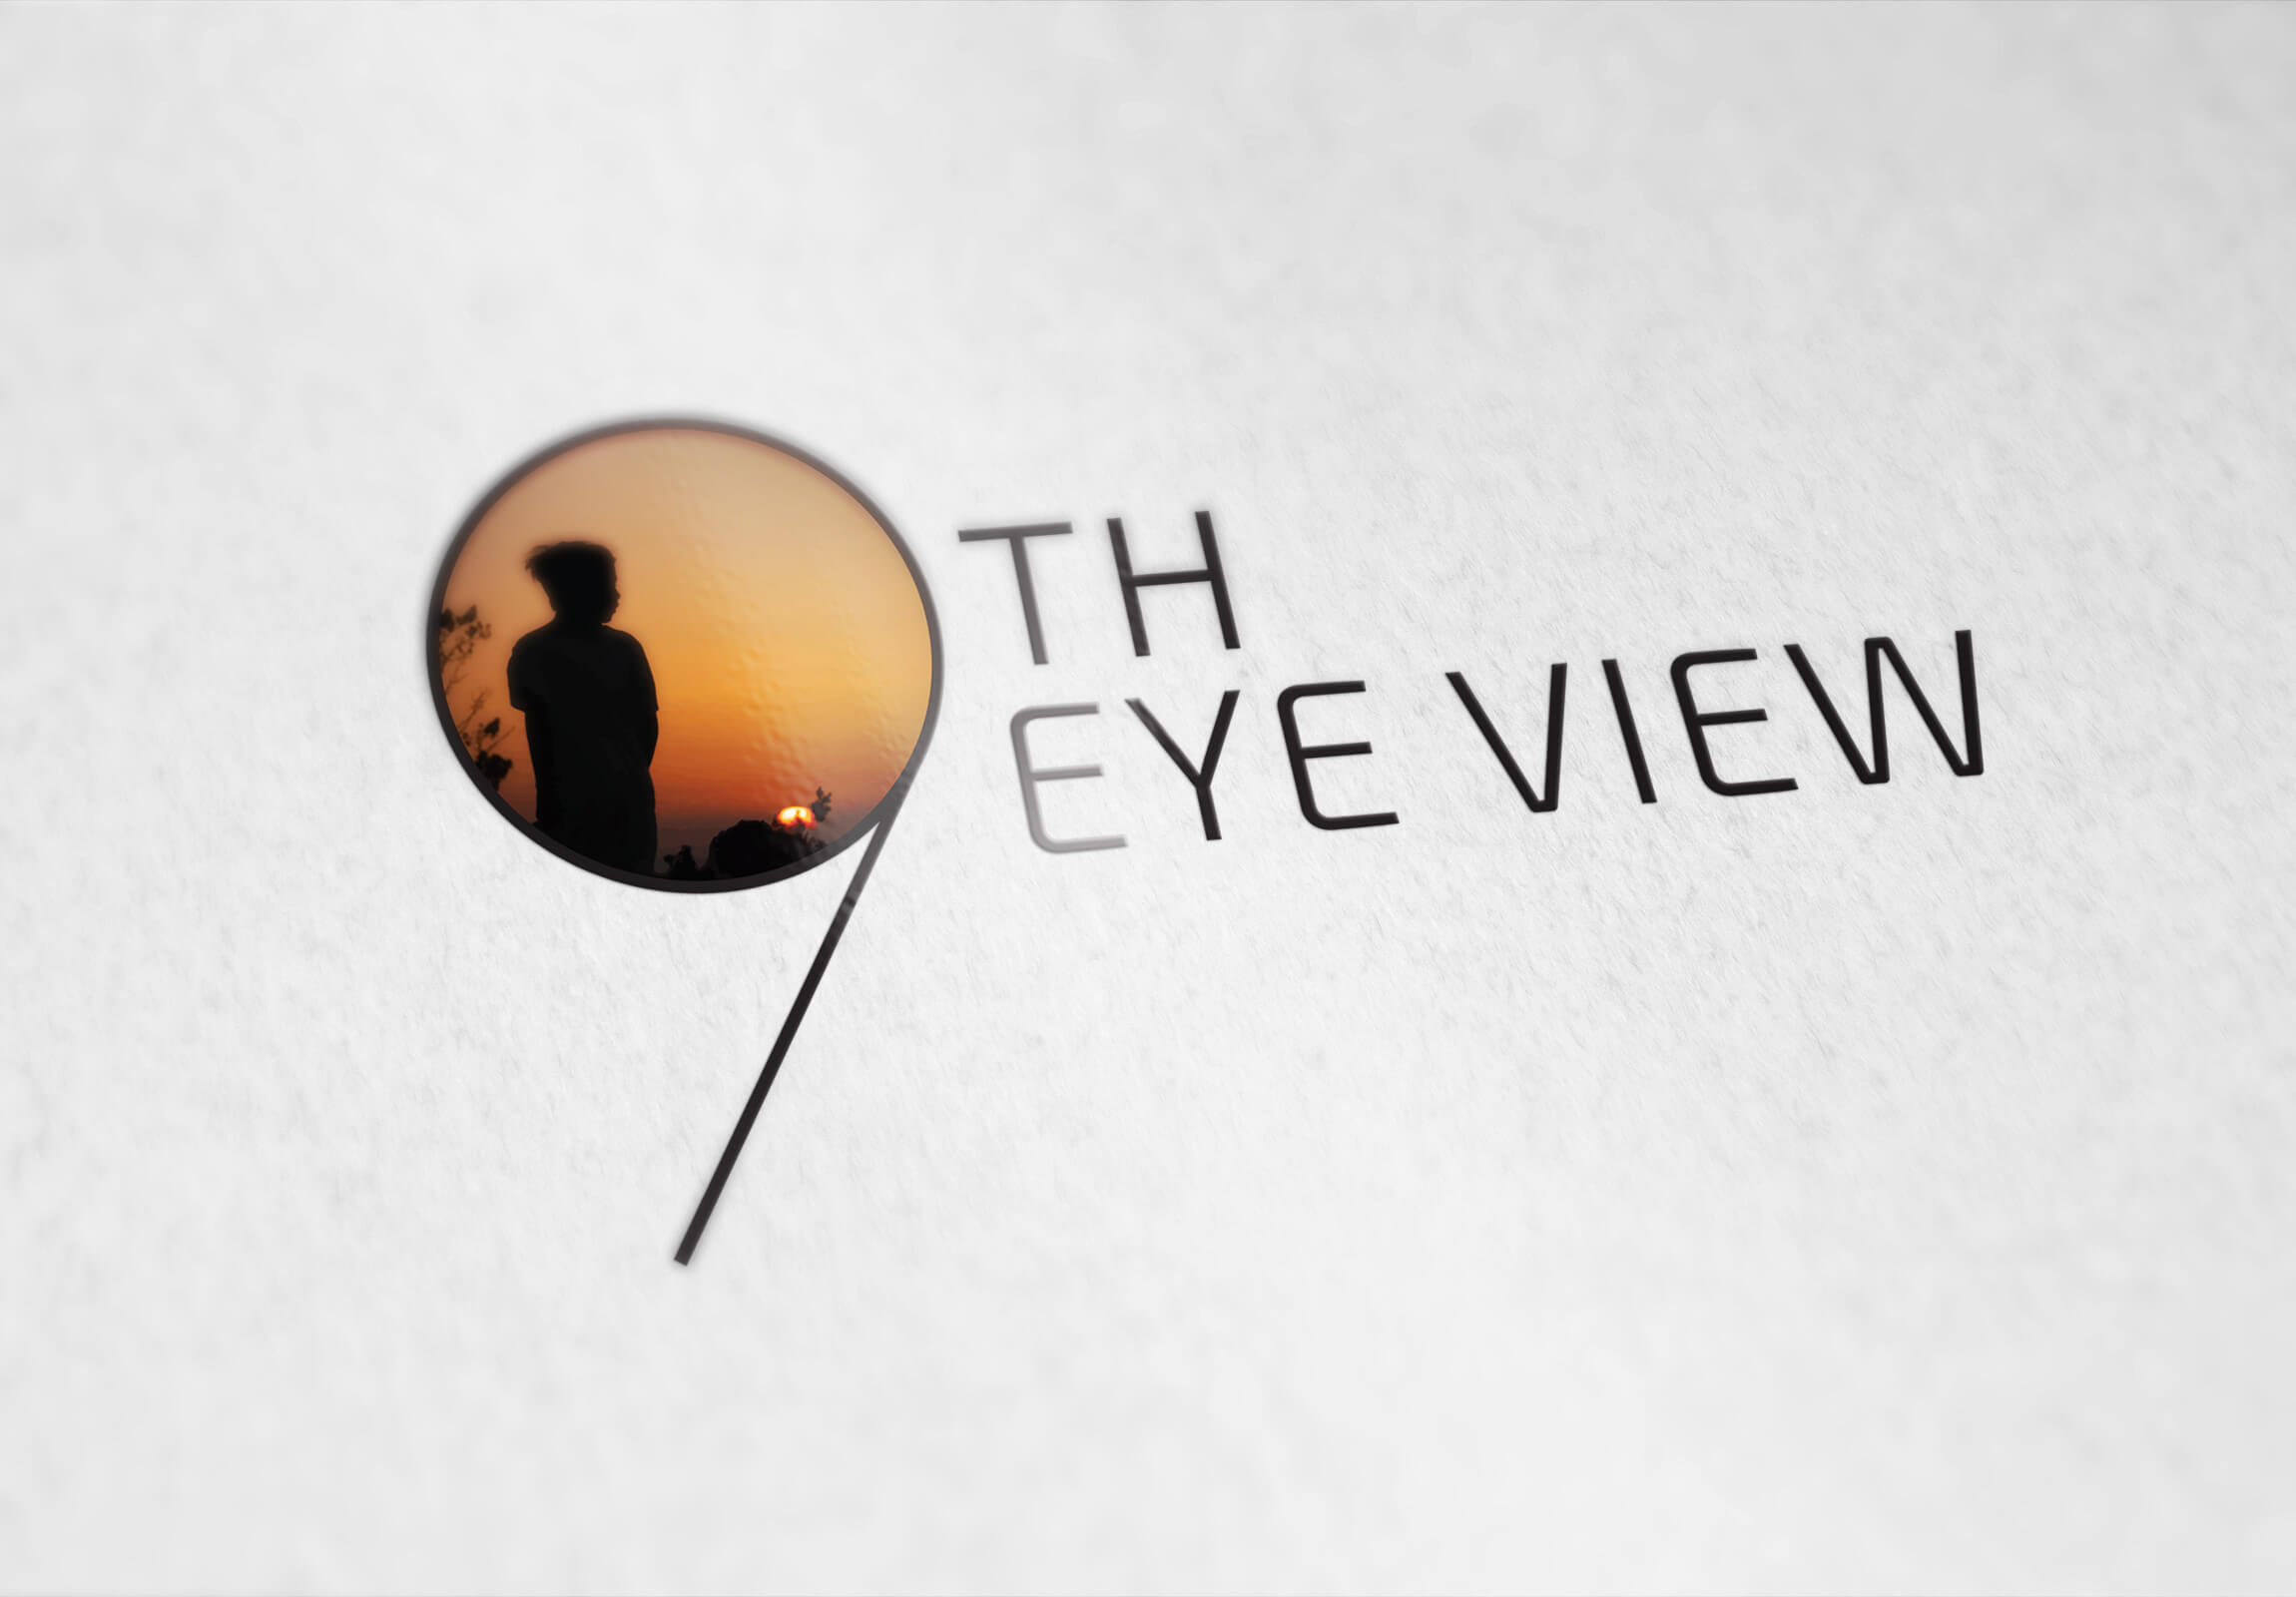 9th Eye View - Designs by CR8VE designs Perth